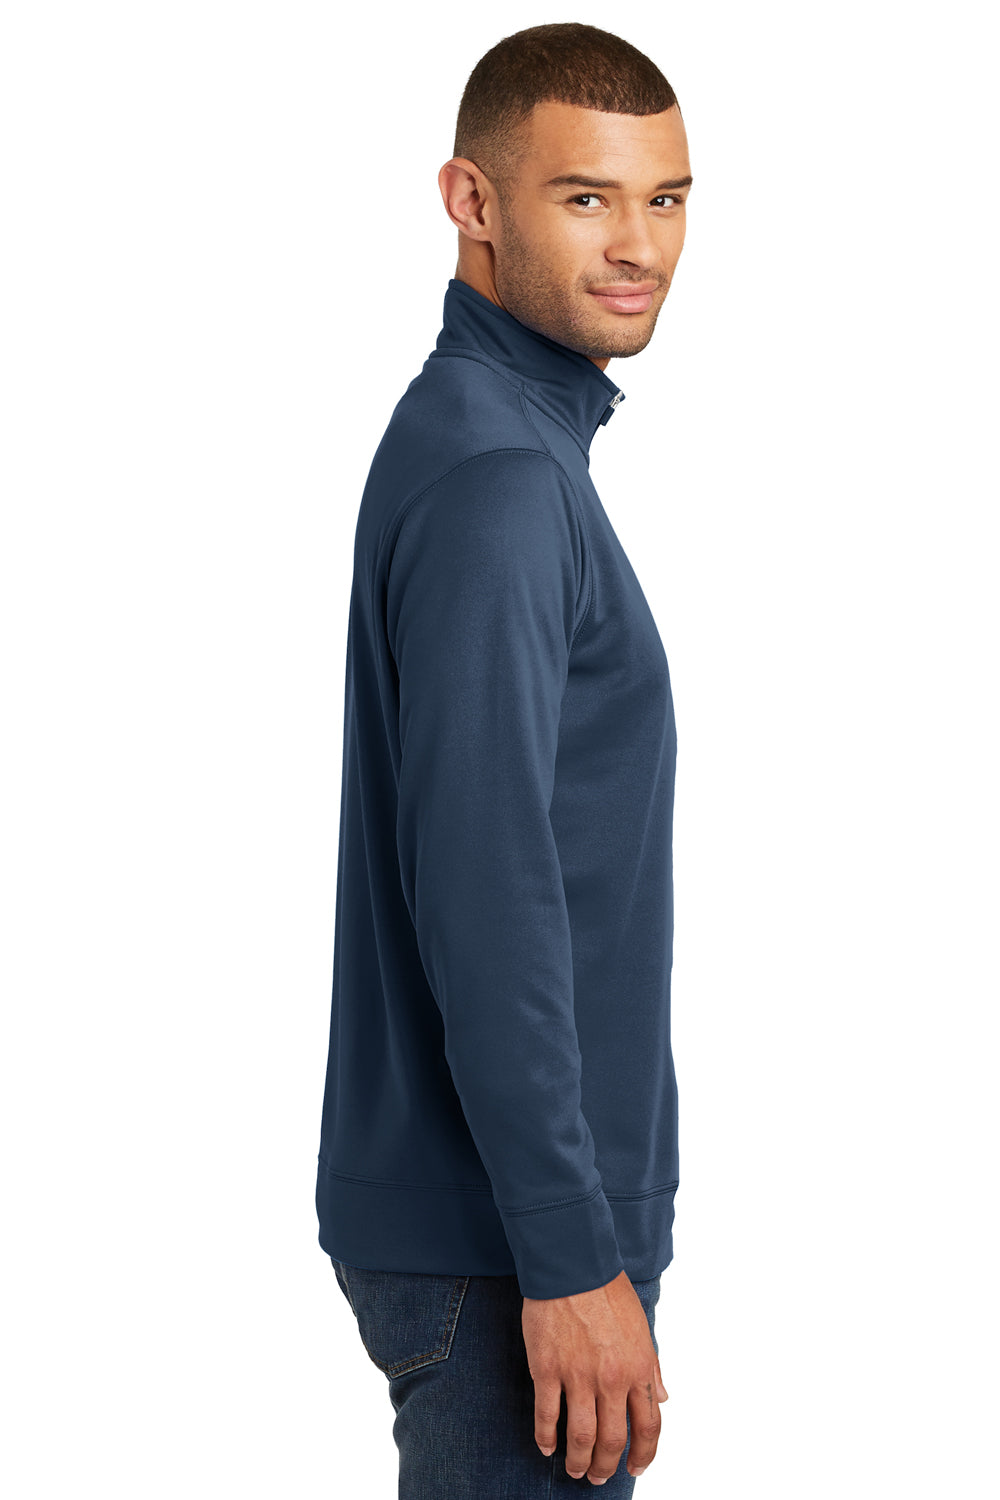 Port & Company PC590Q Mens Dry Zone Performance Moisture Wicking Fleece 1/4 Zip Sweatshirt Navy Blue Side